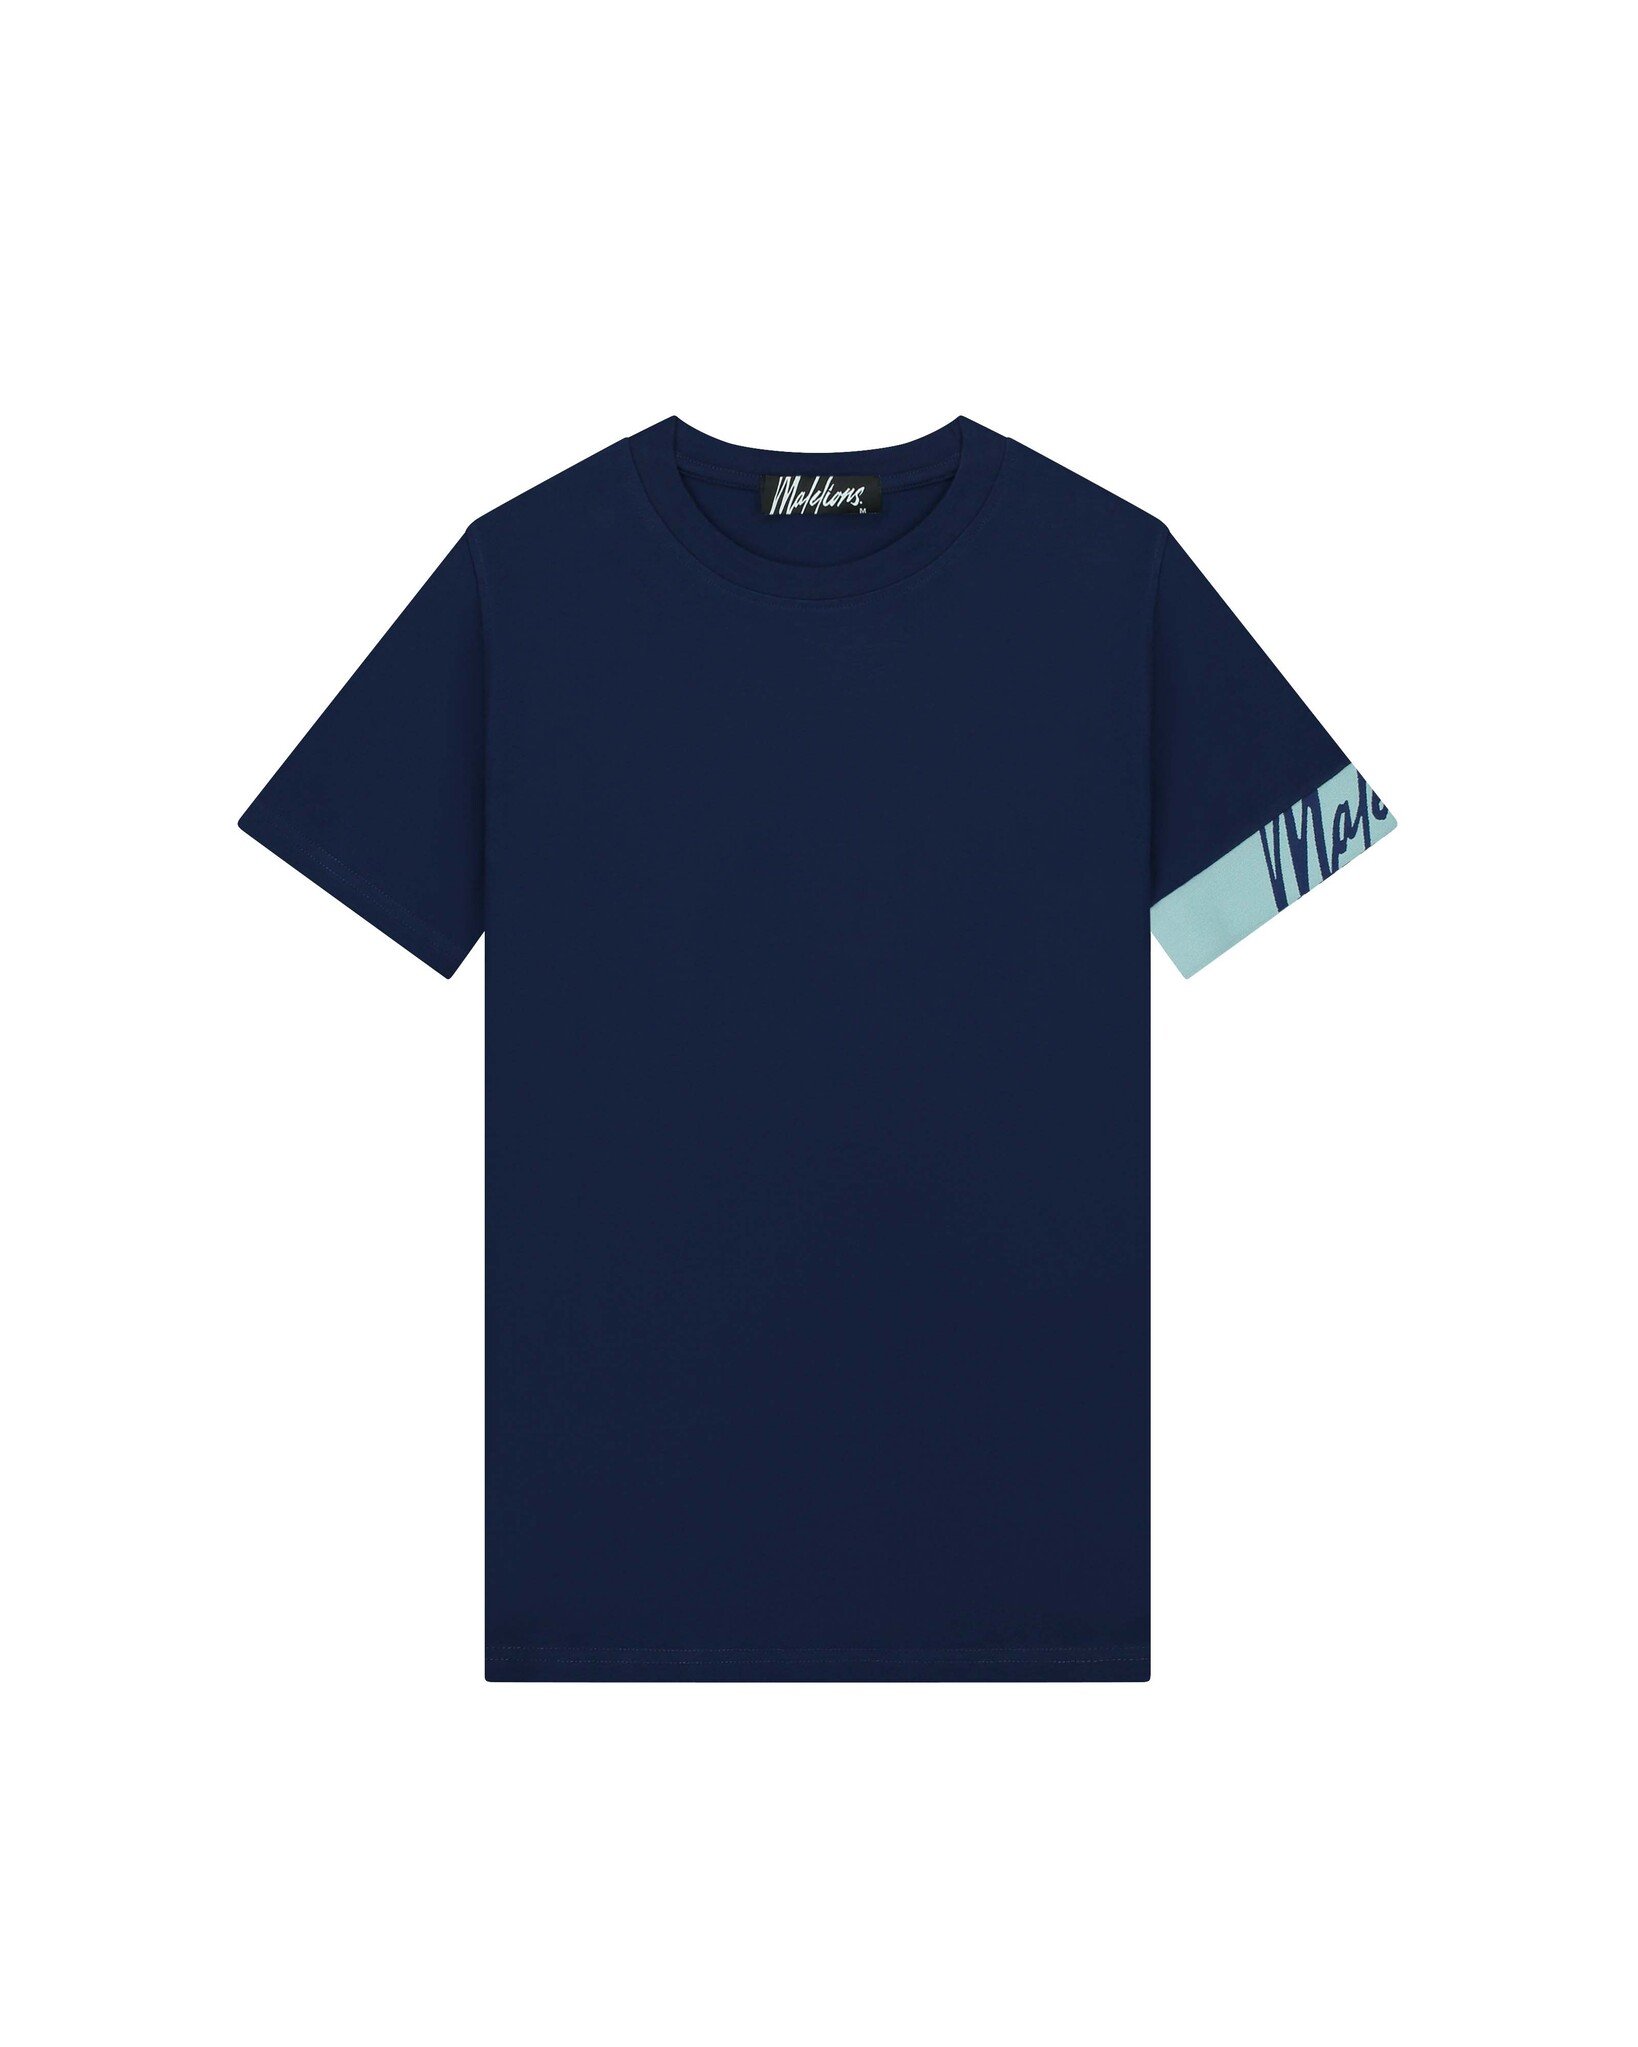 Malelions Men Captain T-Shirt 2.0 - Navy/Light Blue